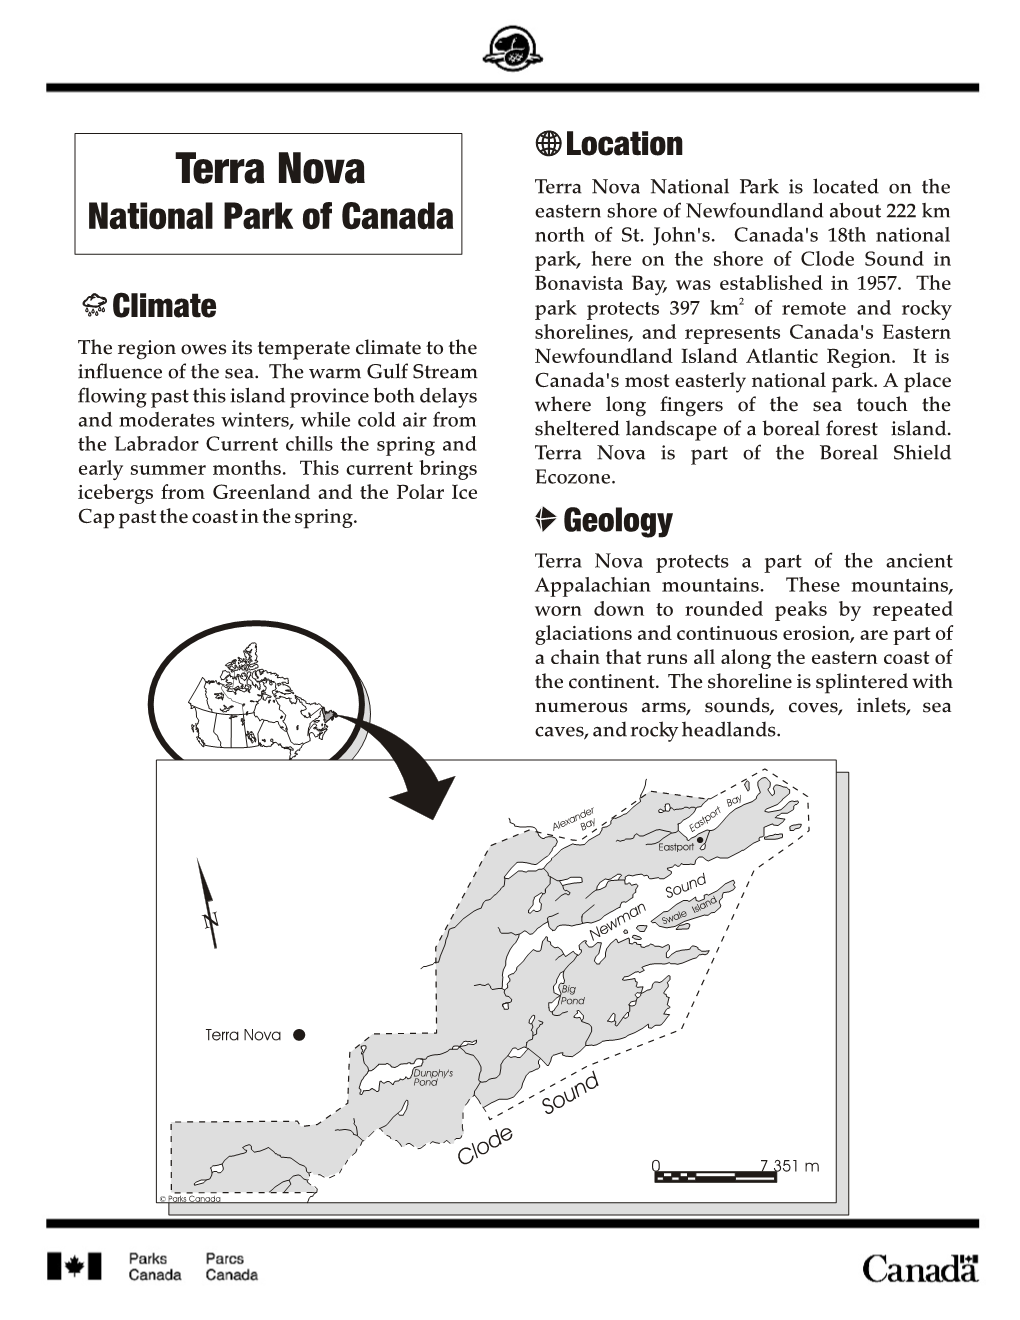 Terra Nova National Park of Canada